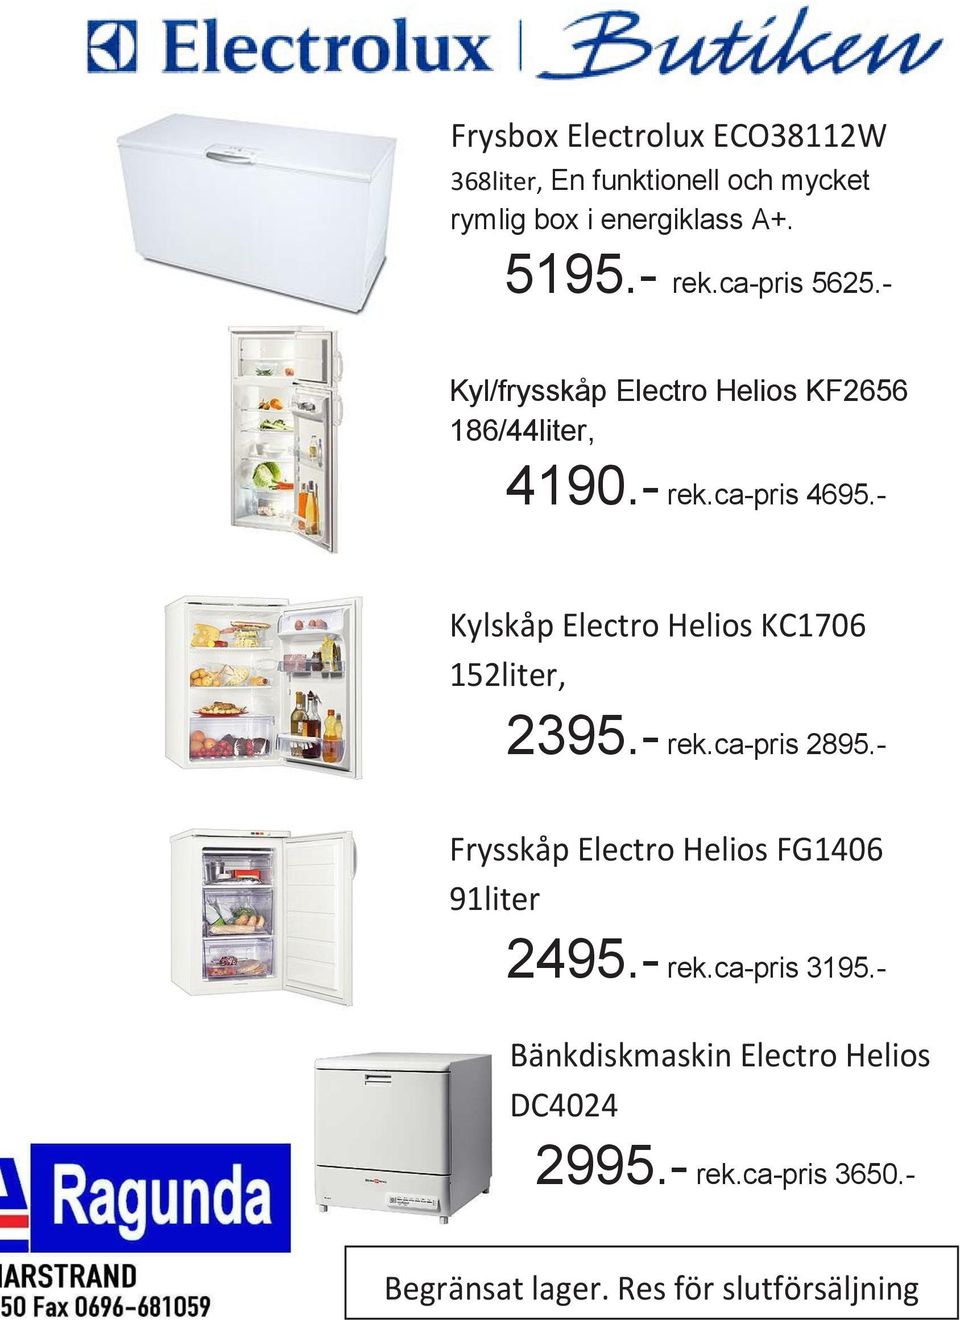 - Kylskåp Electro Helios KC1706 152liter, 2395.- rek.ca-pris 2895.